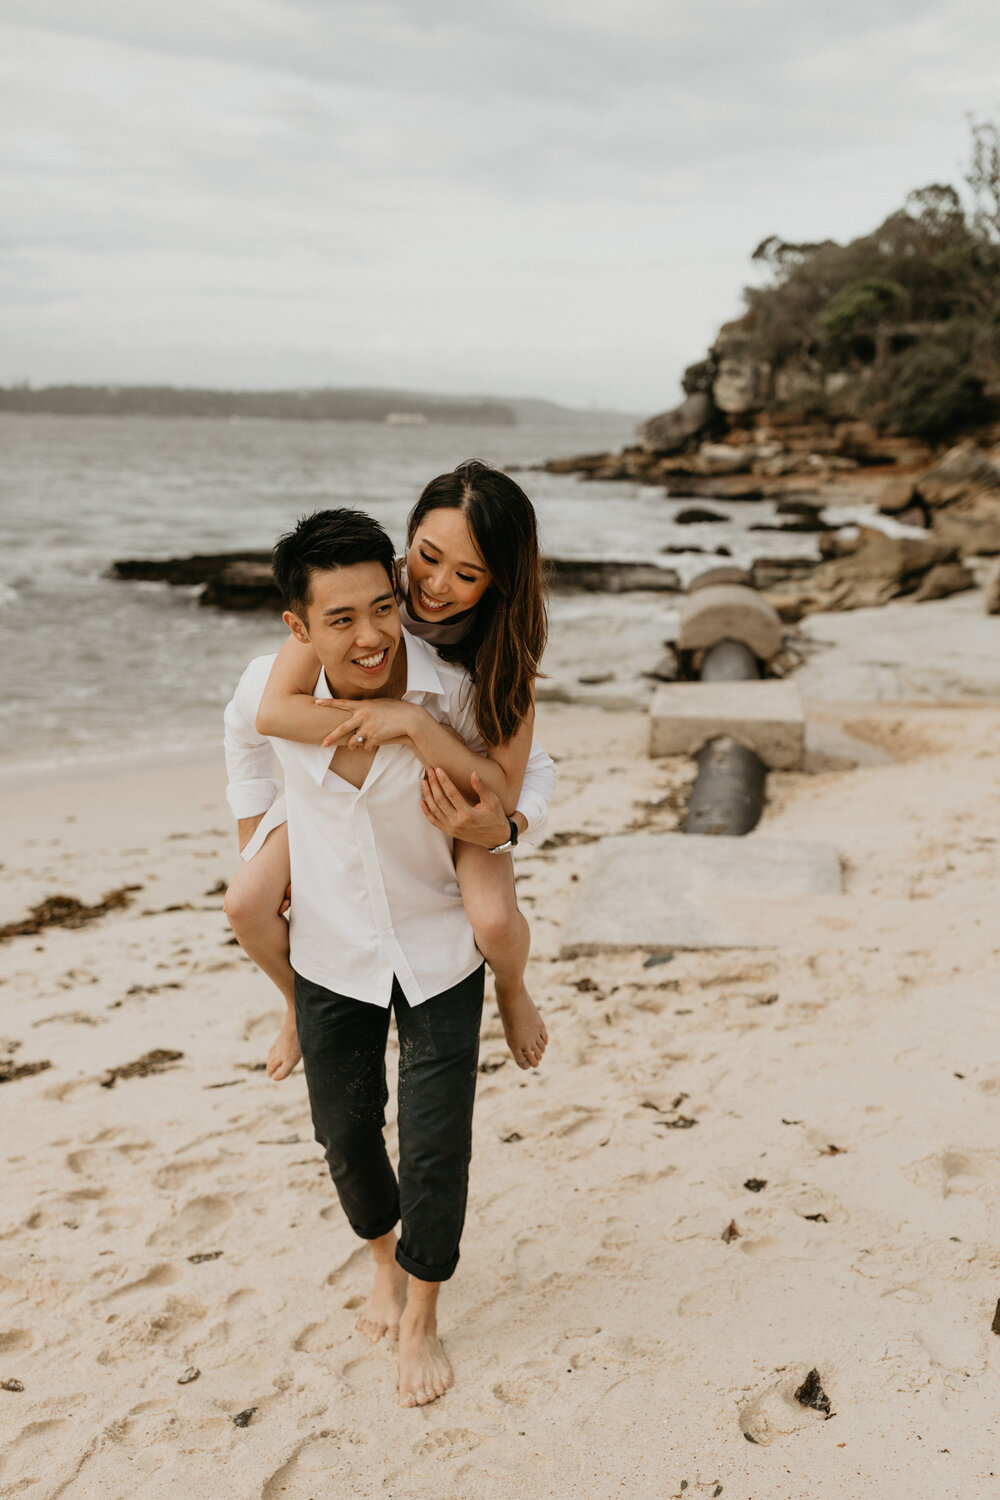 Sydney Wedding Photographer Akaness Sharks-Romantic Sydney Beach Engagement Best artistic -48.jpg